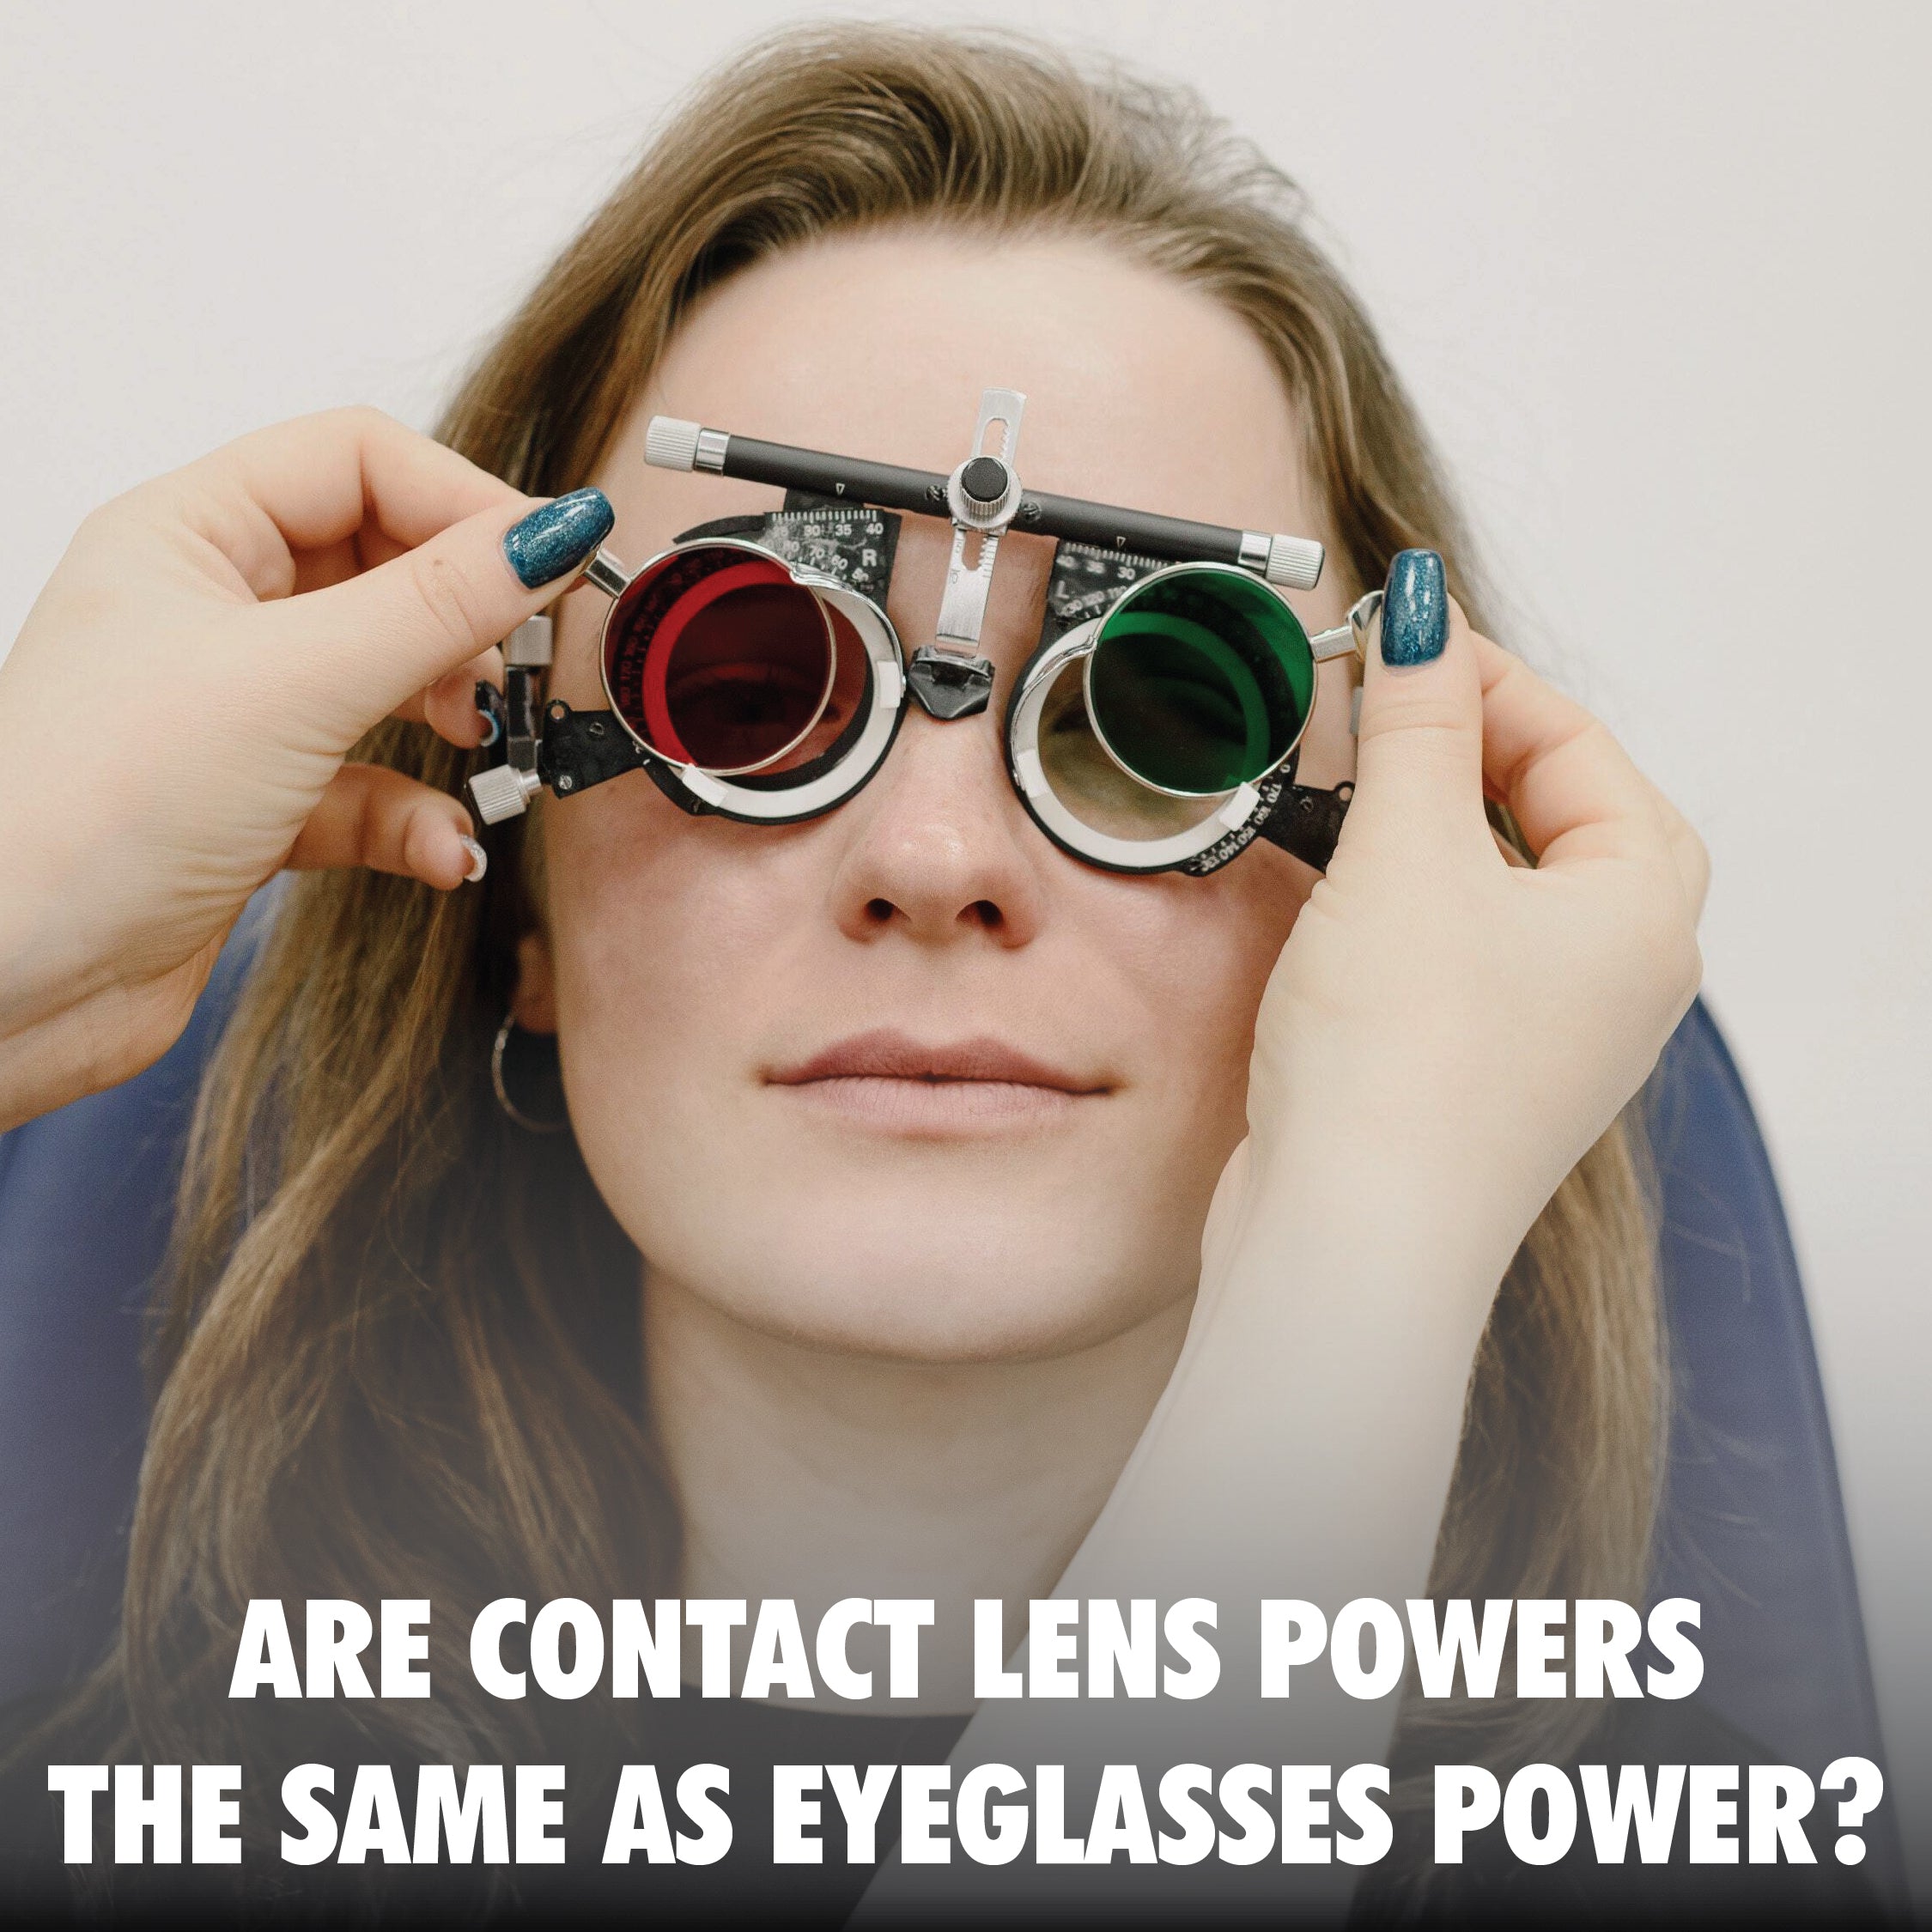 Eye-Conic Enigmas: Decoding Contact Lens Powers!